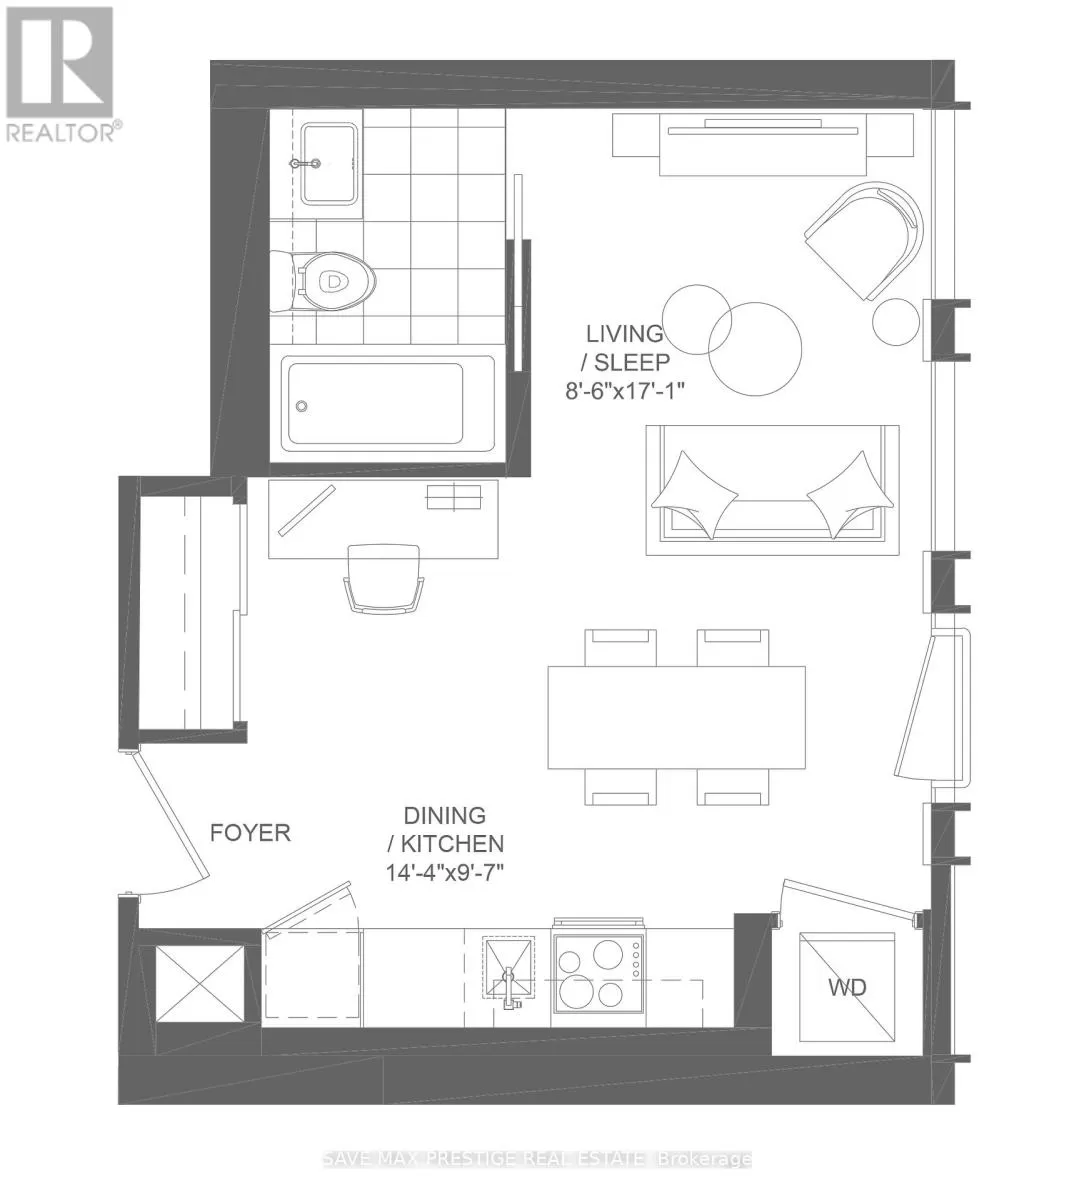 Apartment for rent: 1701 - 234 Simcoe Street, Toronto, Ontario M5T 1T4